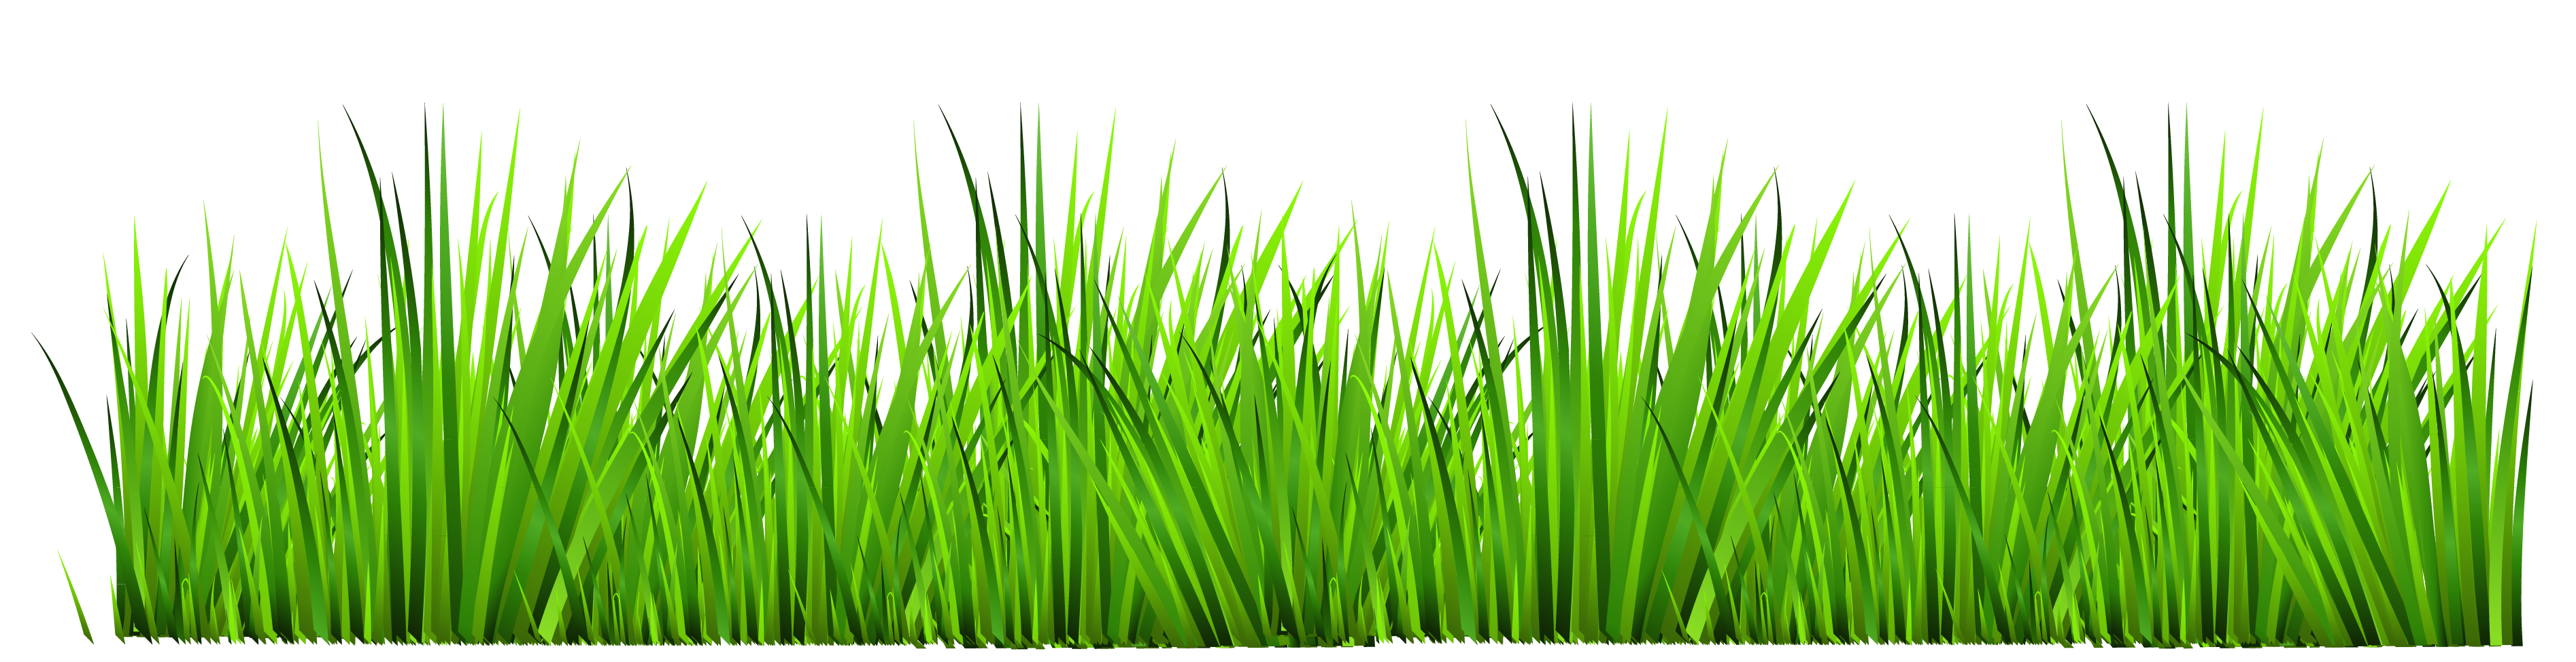 Grass clipart clipartcow